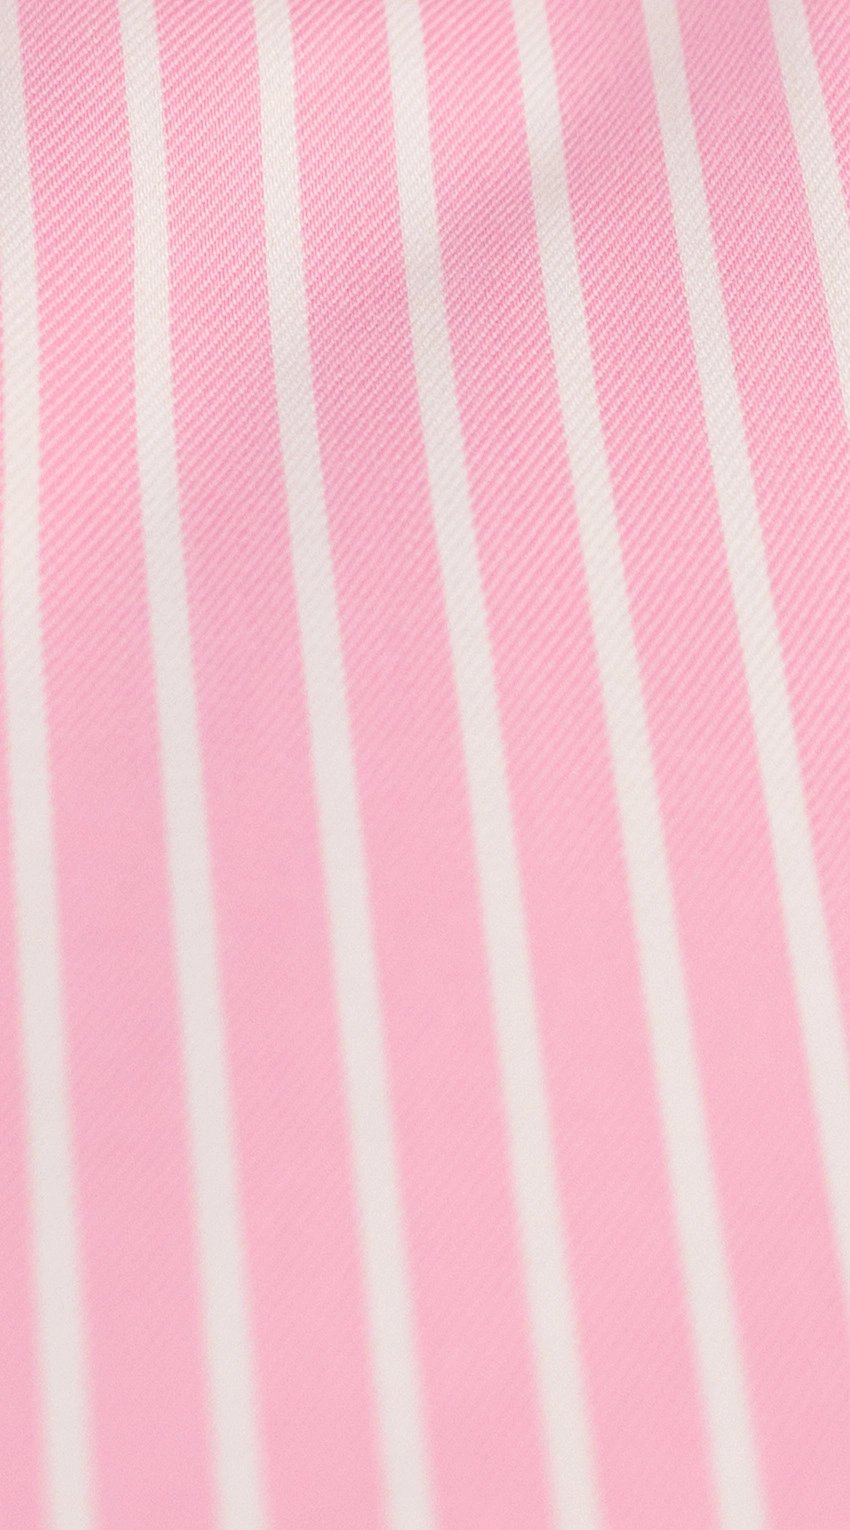 Pink and White Stripe Dress Shirt